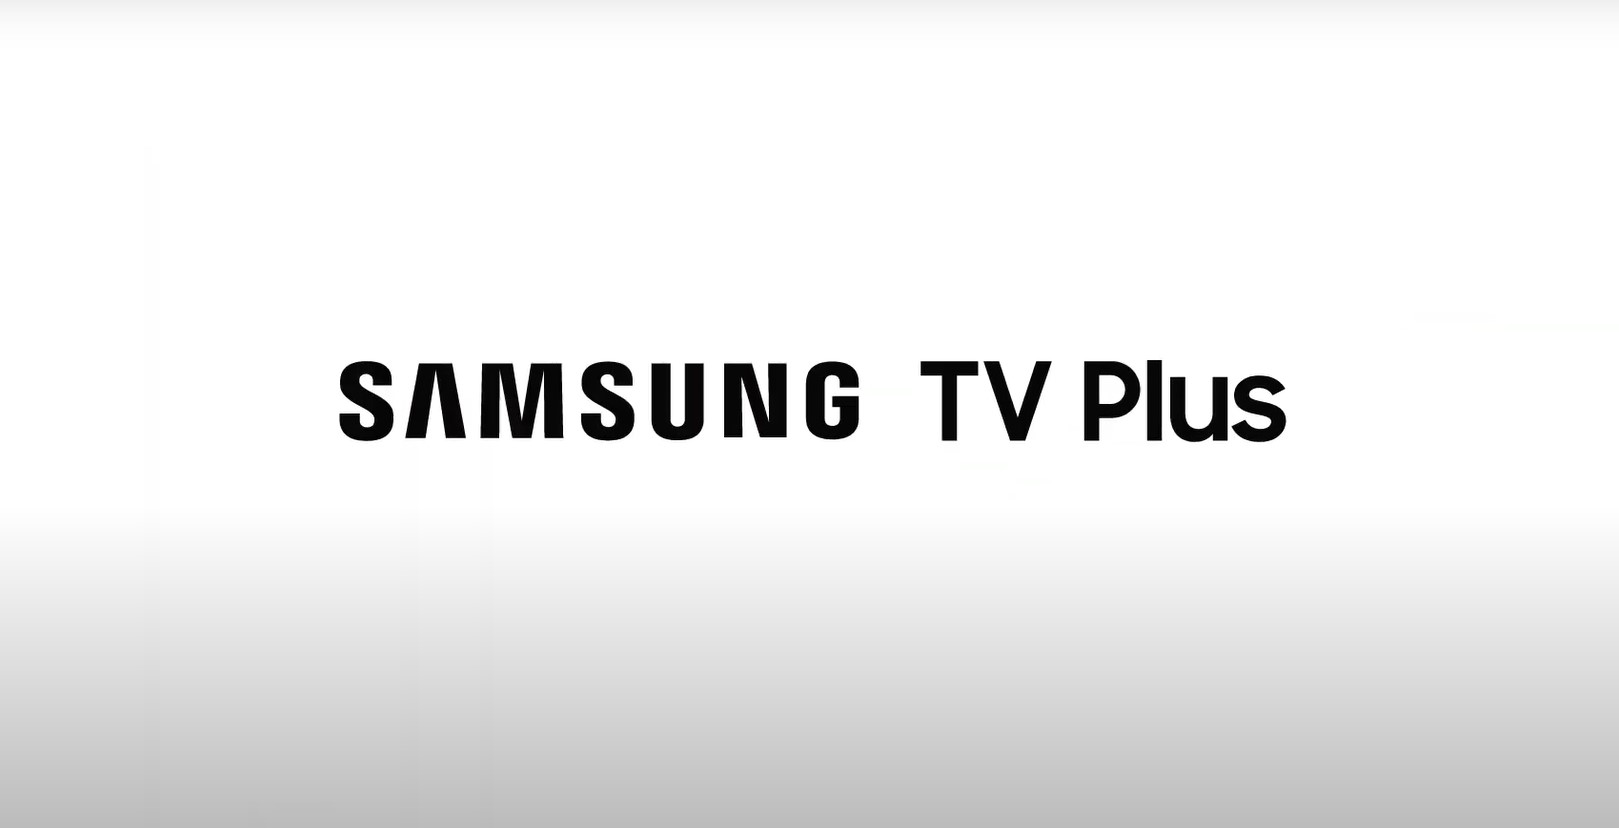 Samsung TV Plus 100 percent Free TV APK download Apps on Google Play